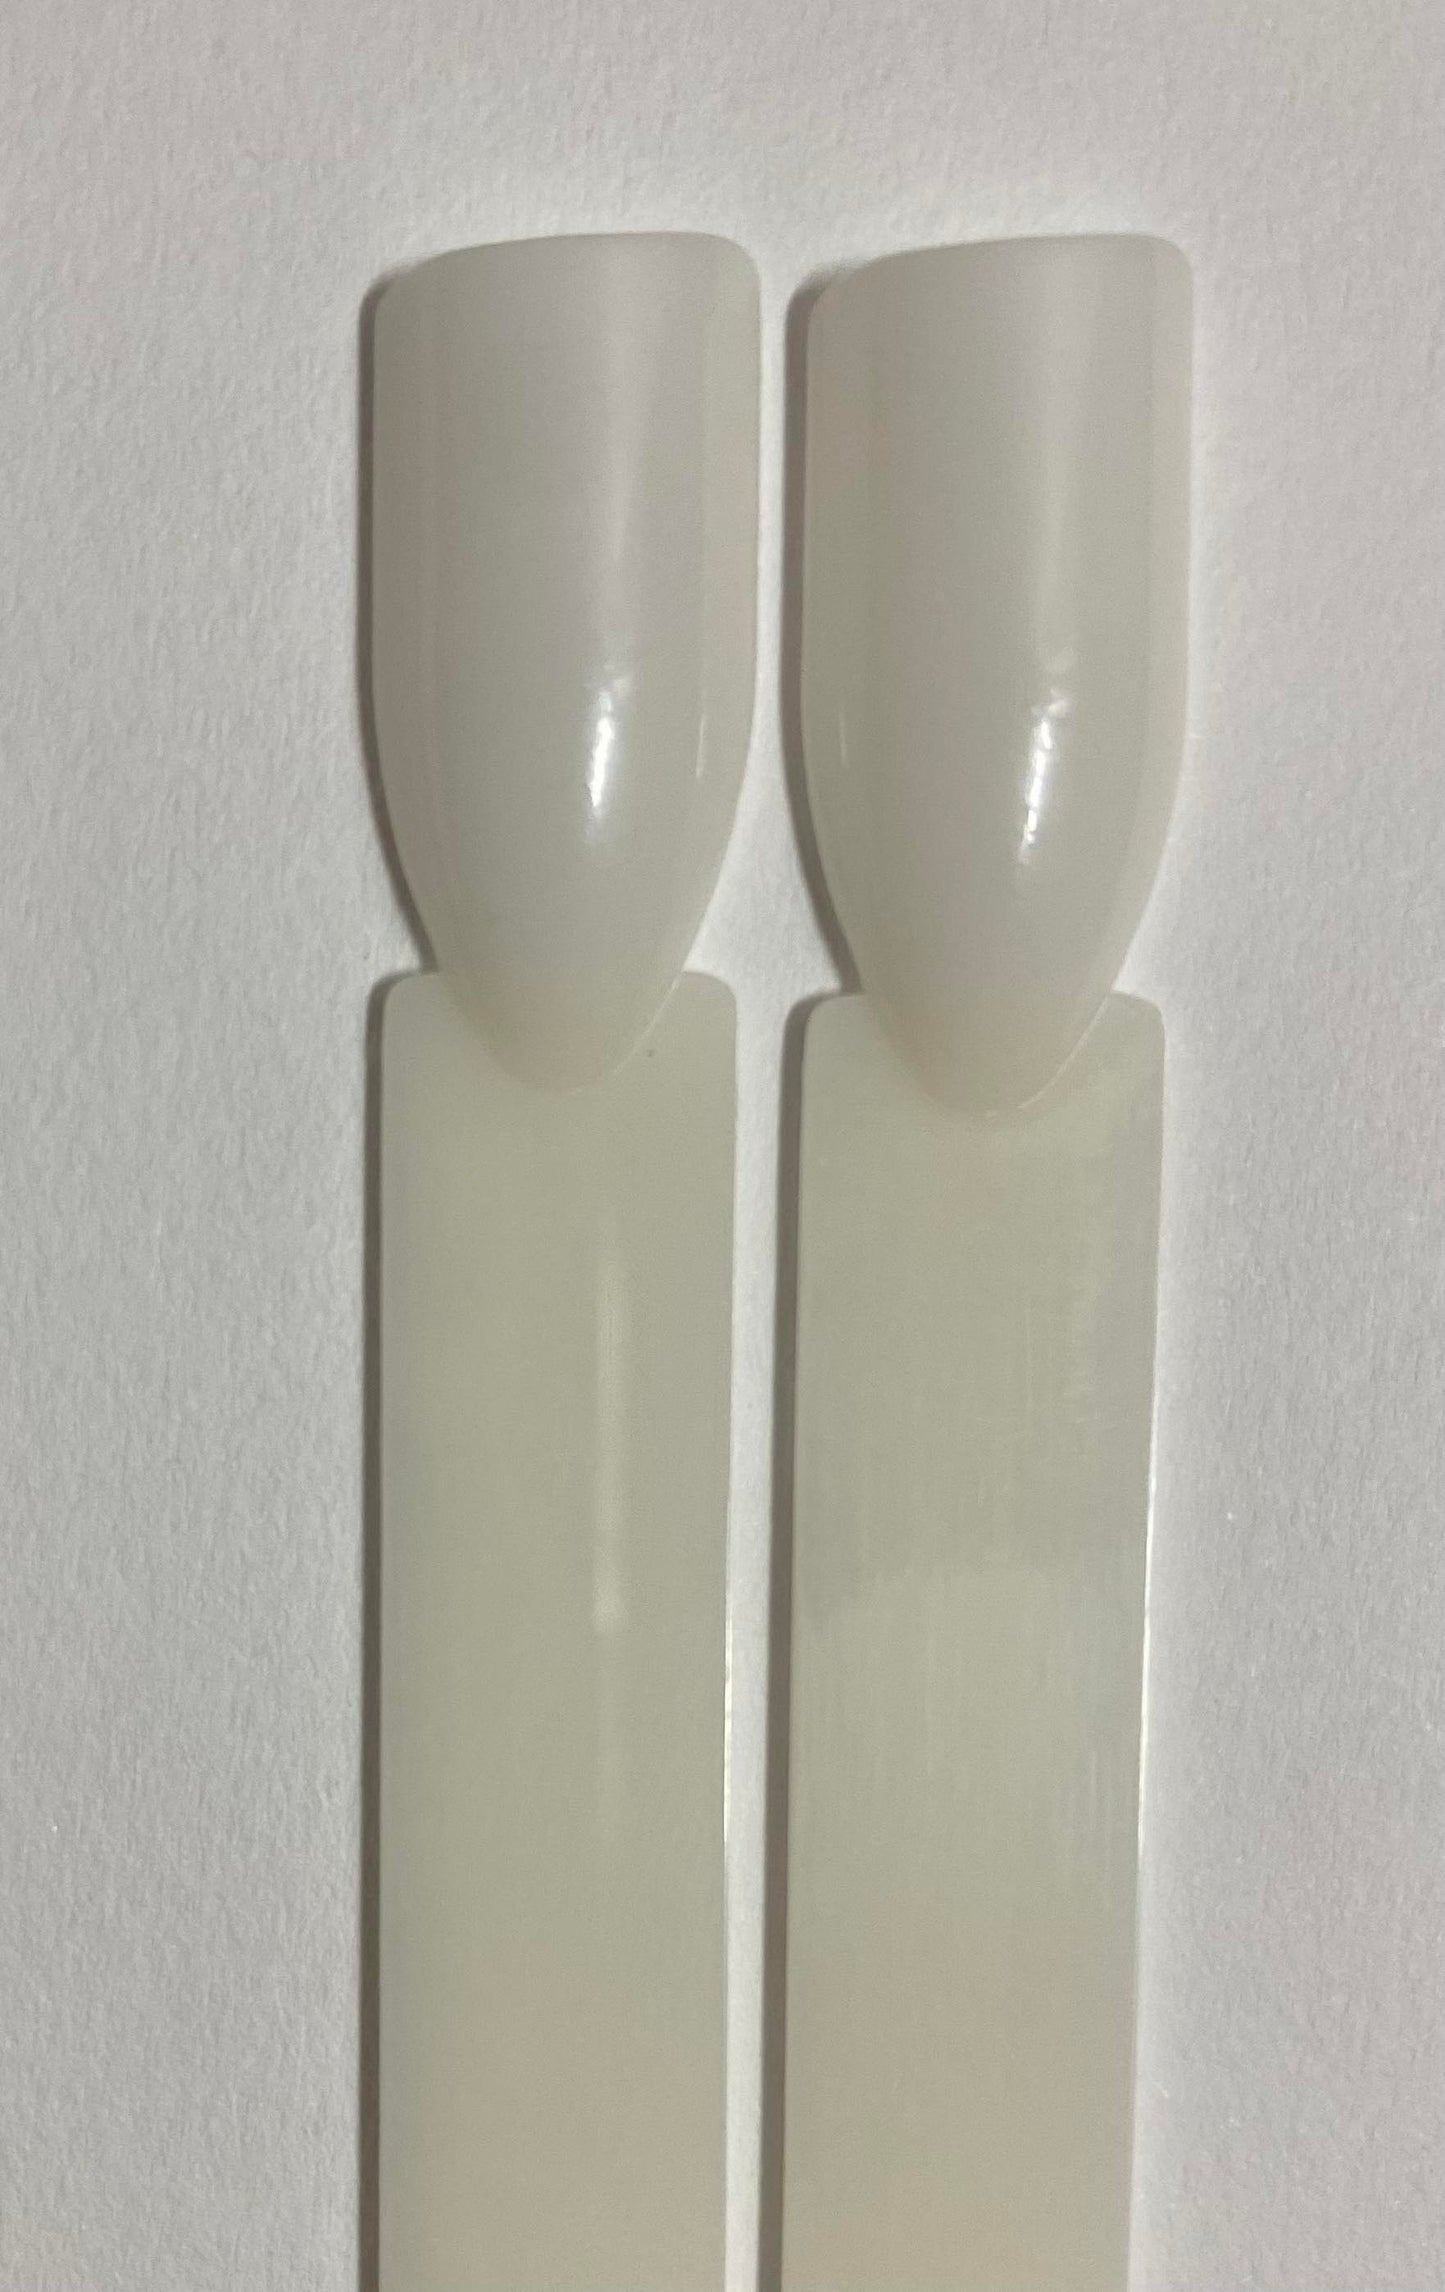 Blank, Labeled Swatch Sticks